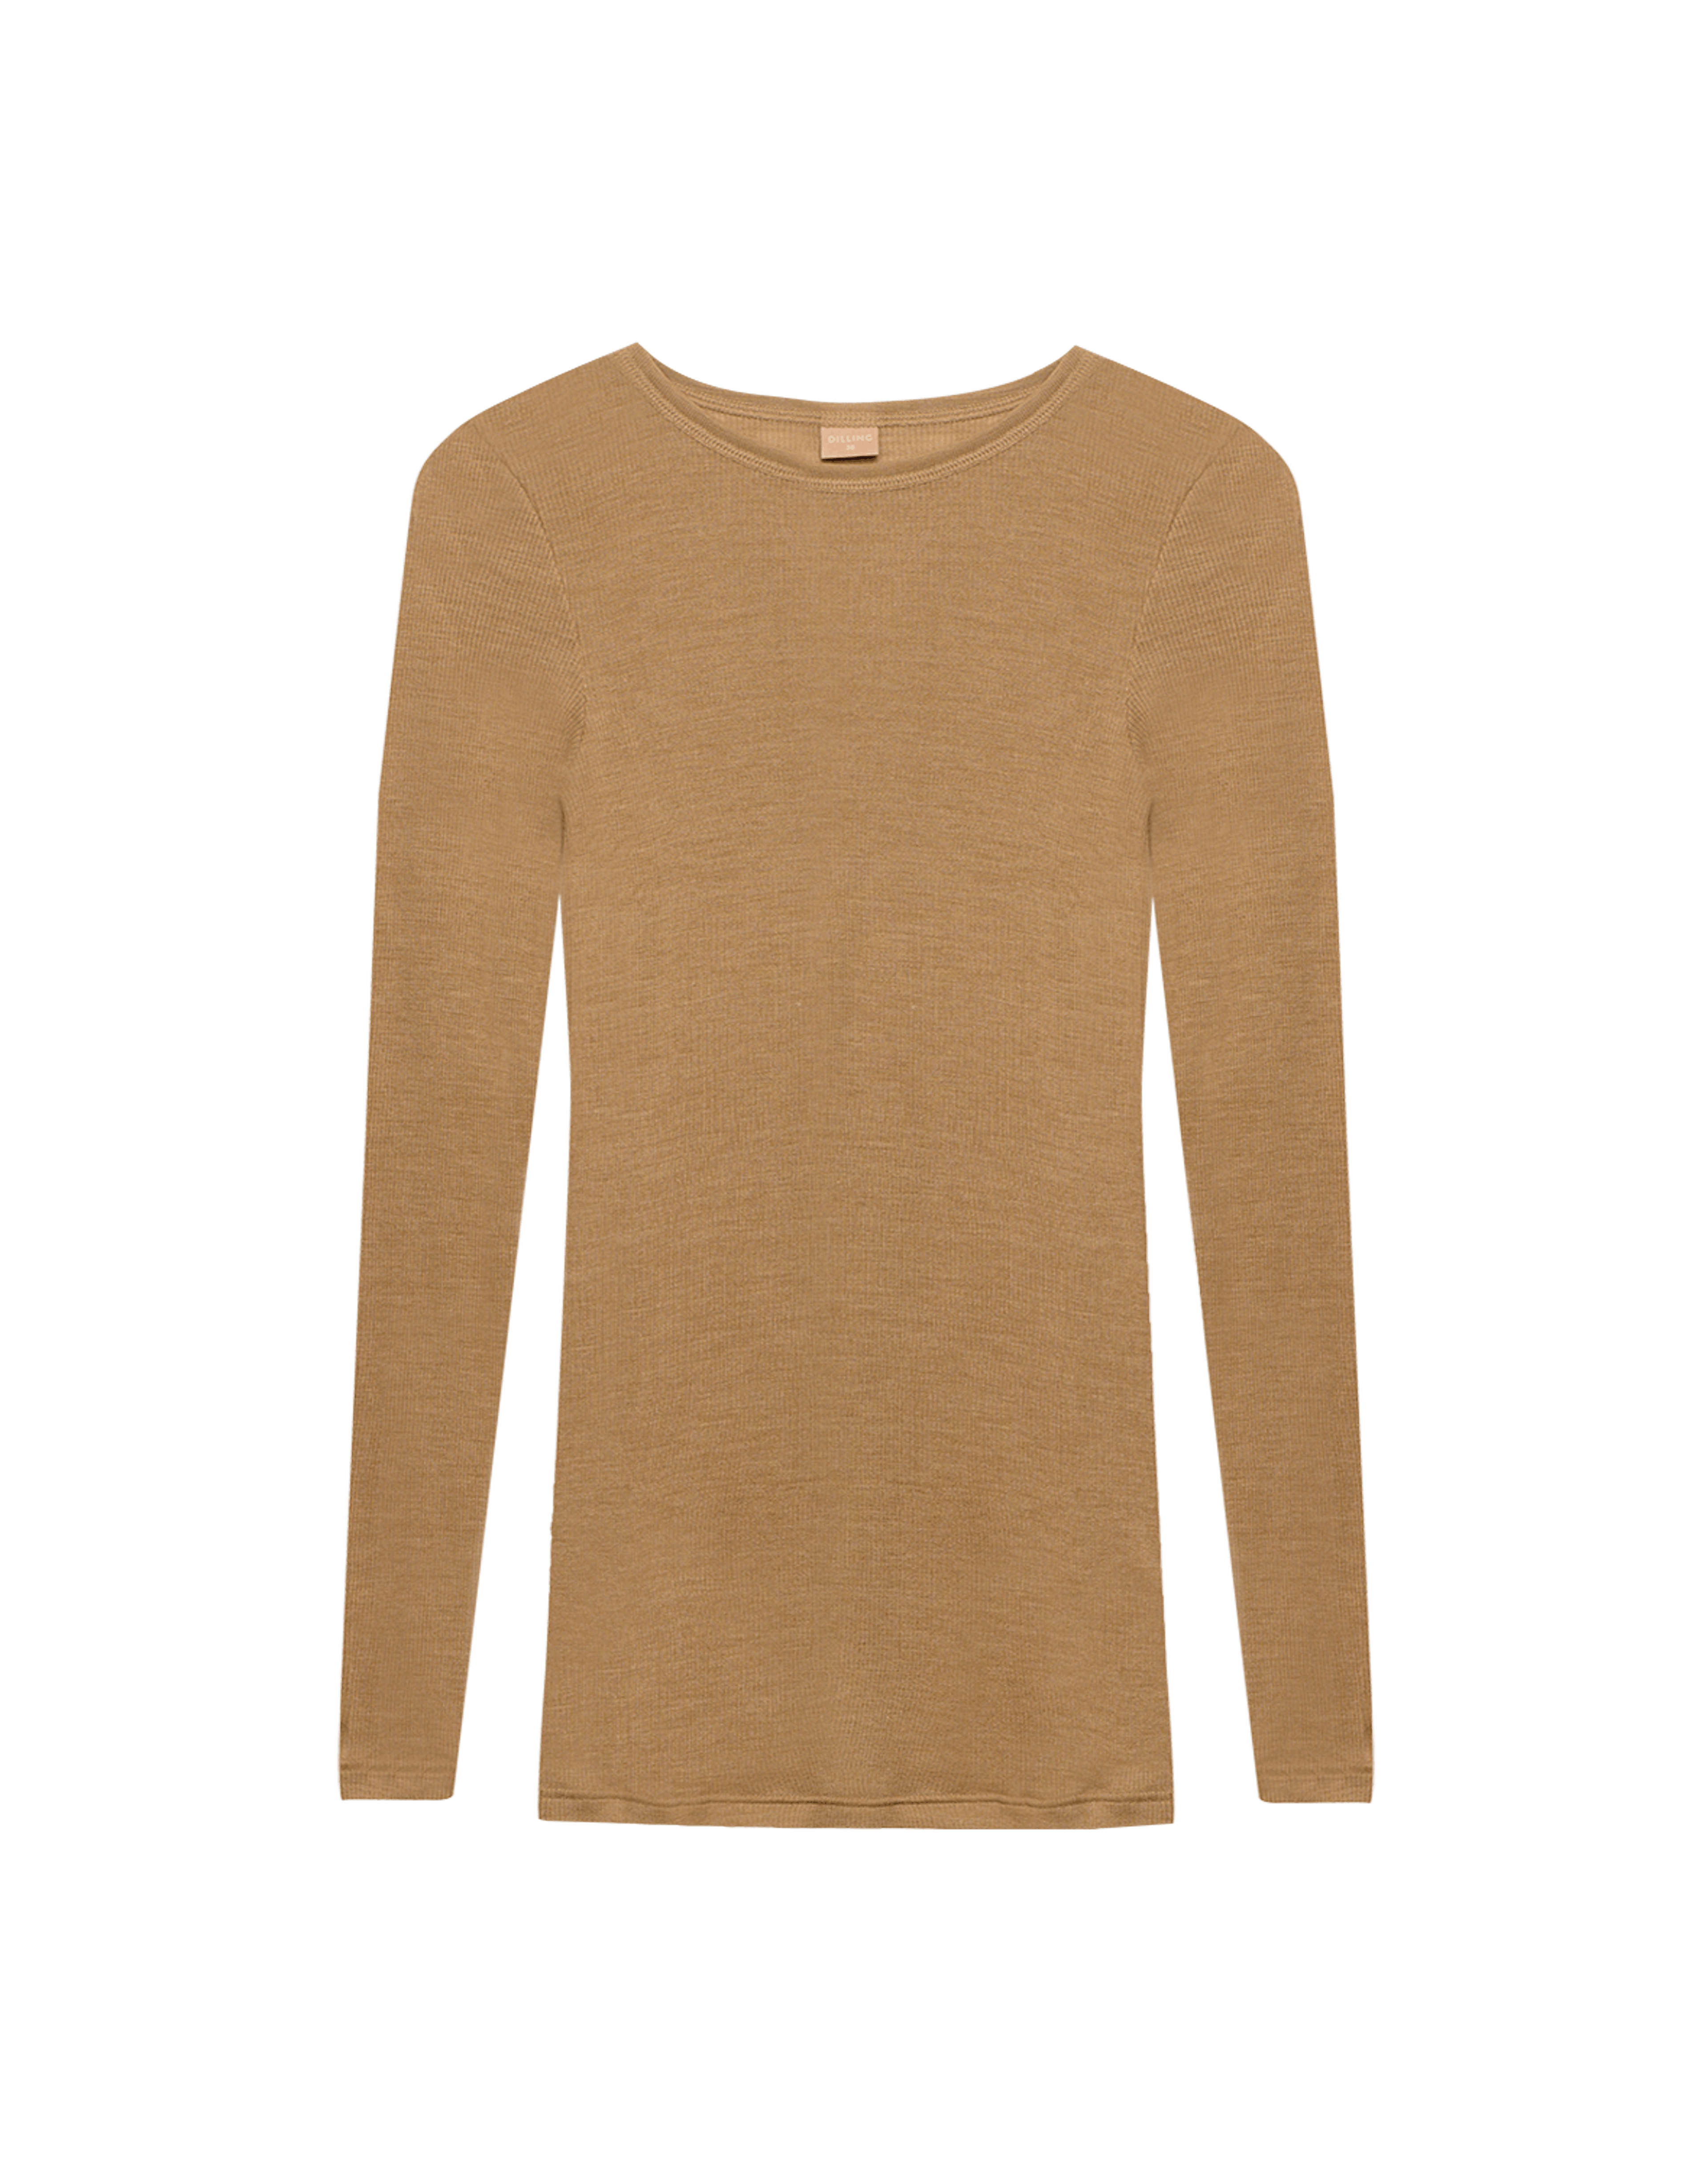 Women’s merino wool/silk long sleeve top